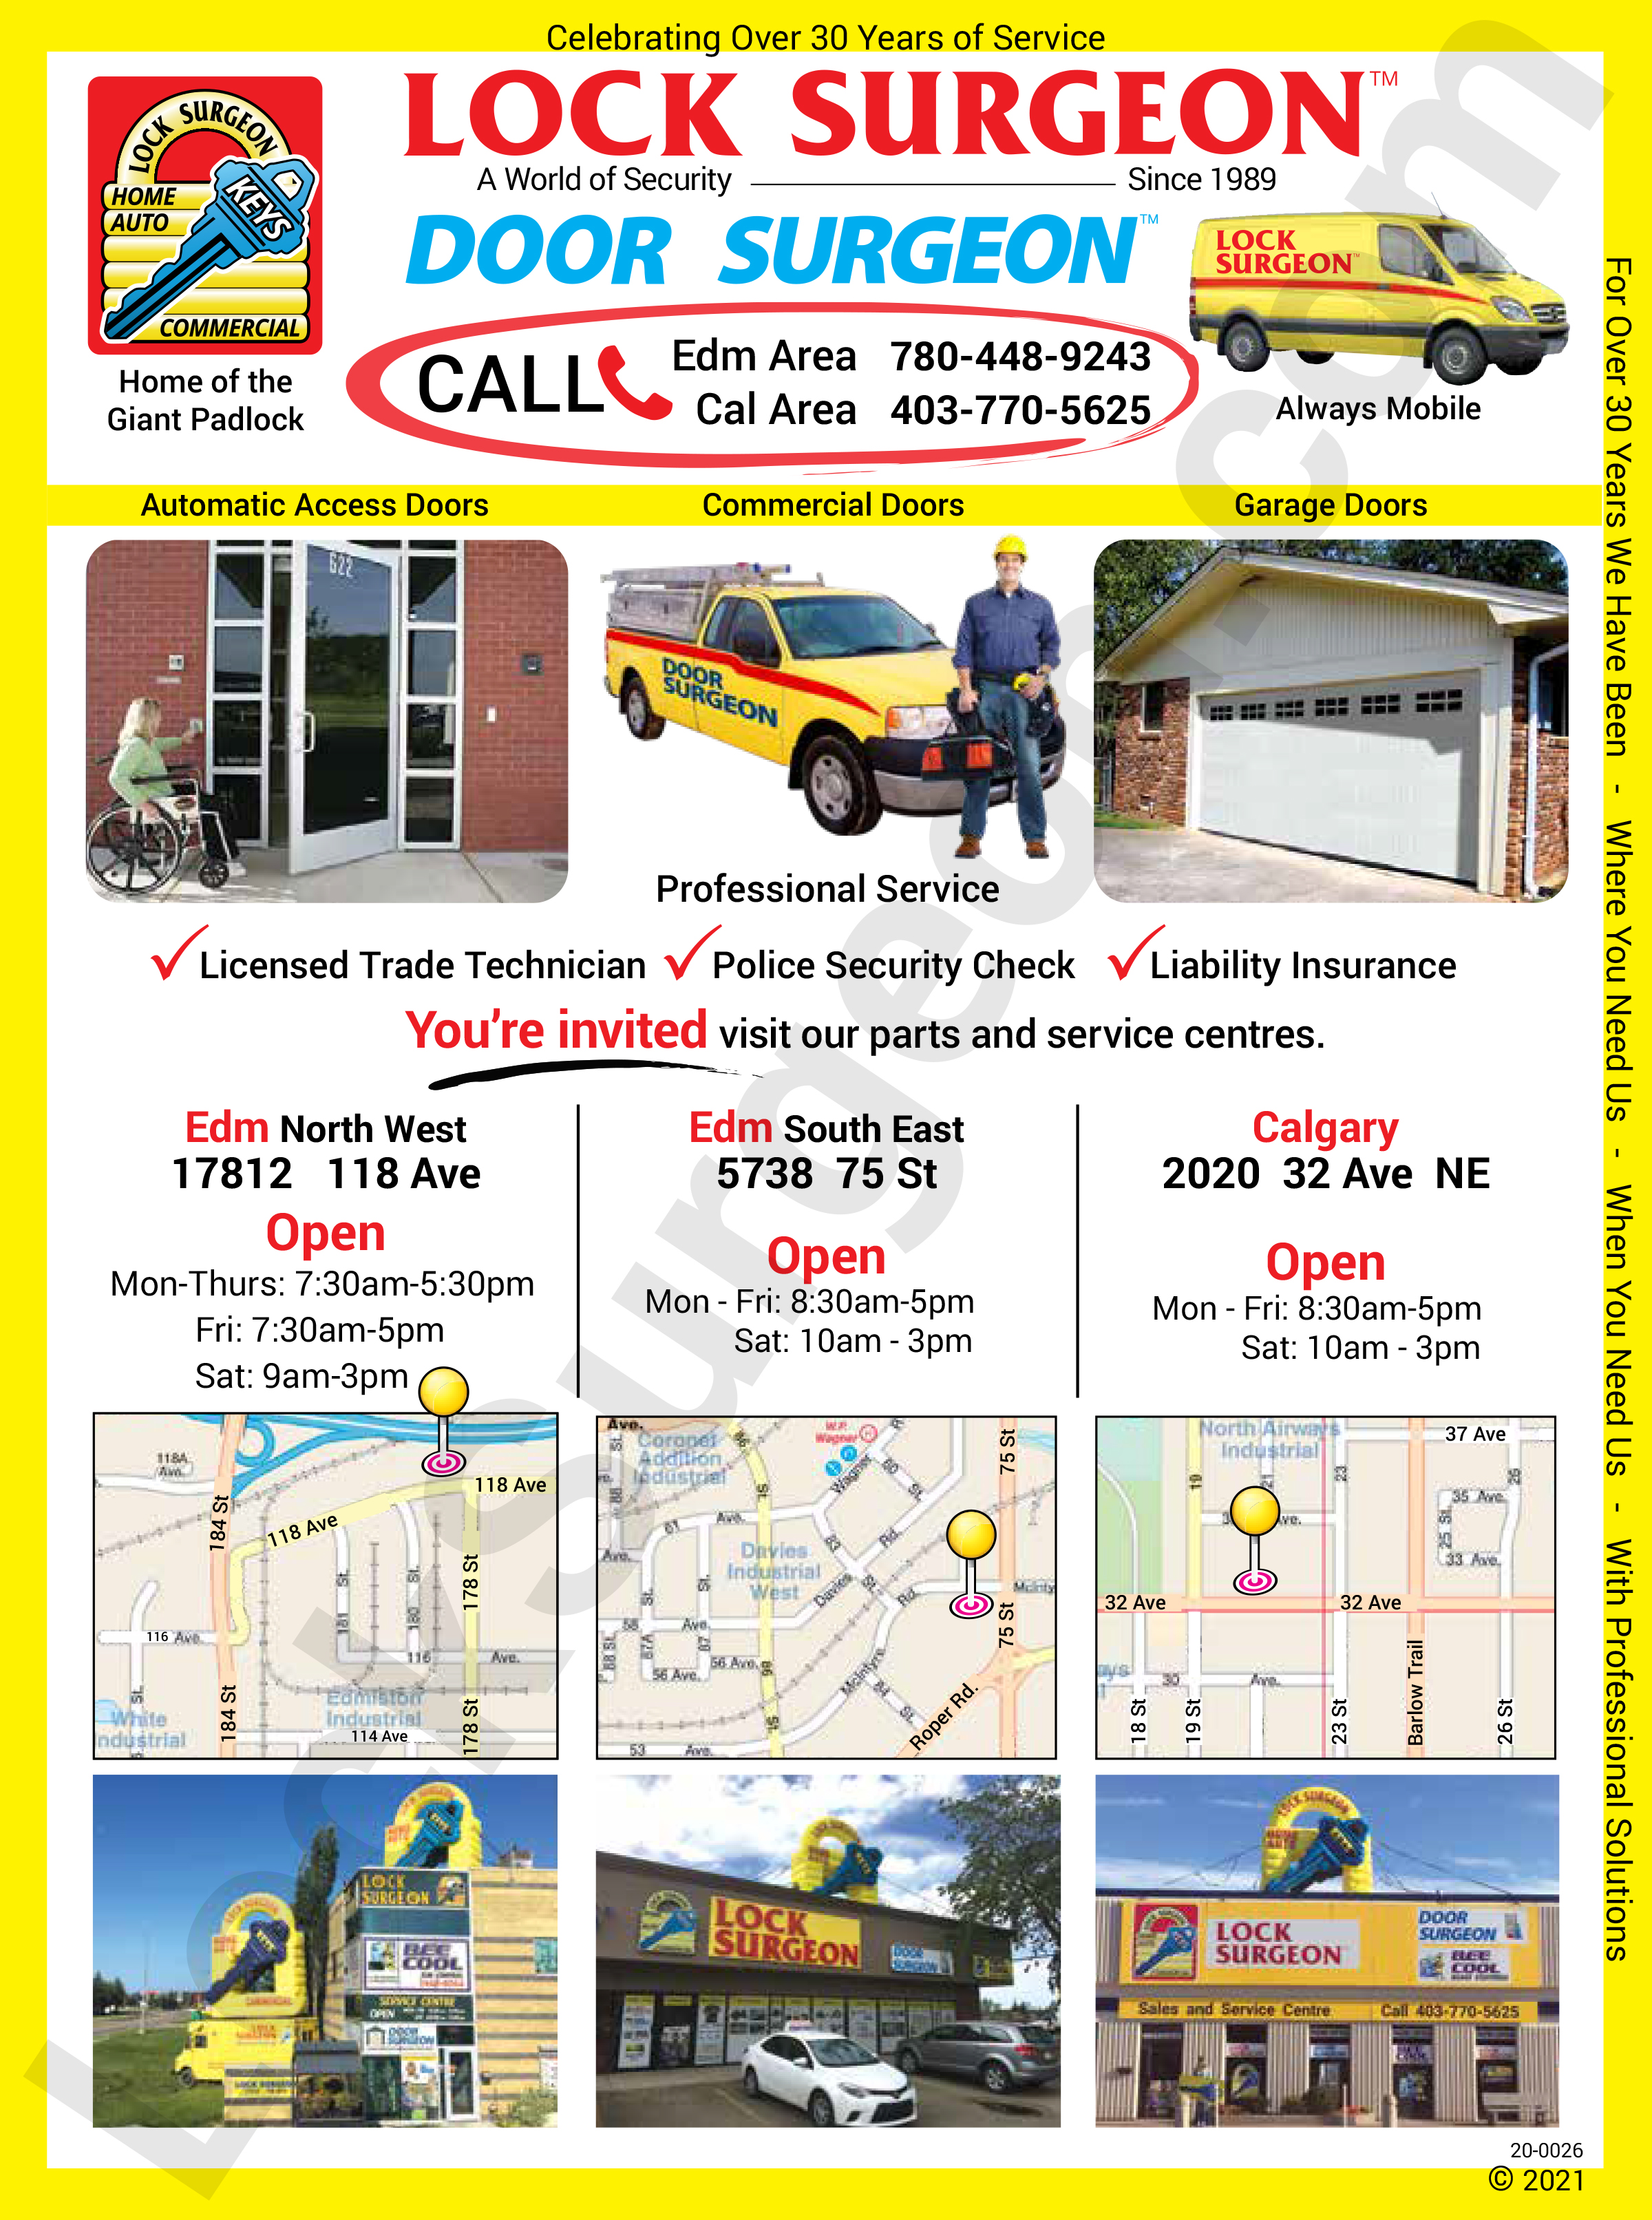 Always mobile repair and service for automatic access doors, commercial doors & garage doors.